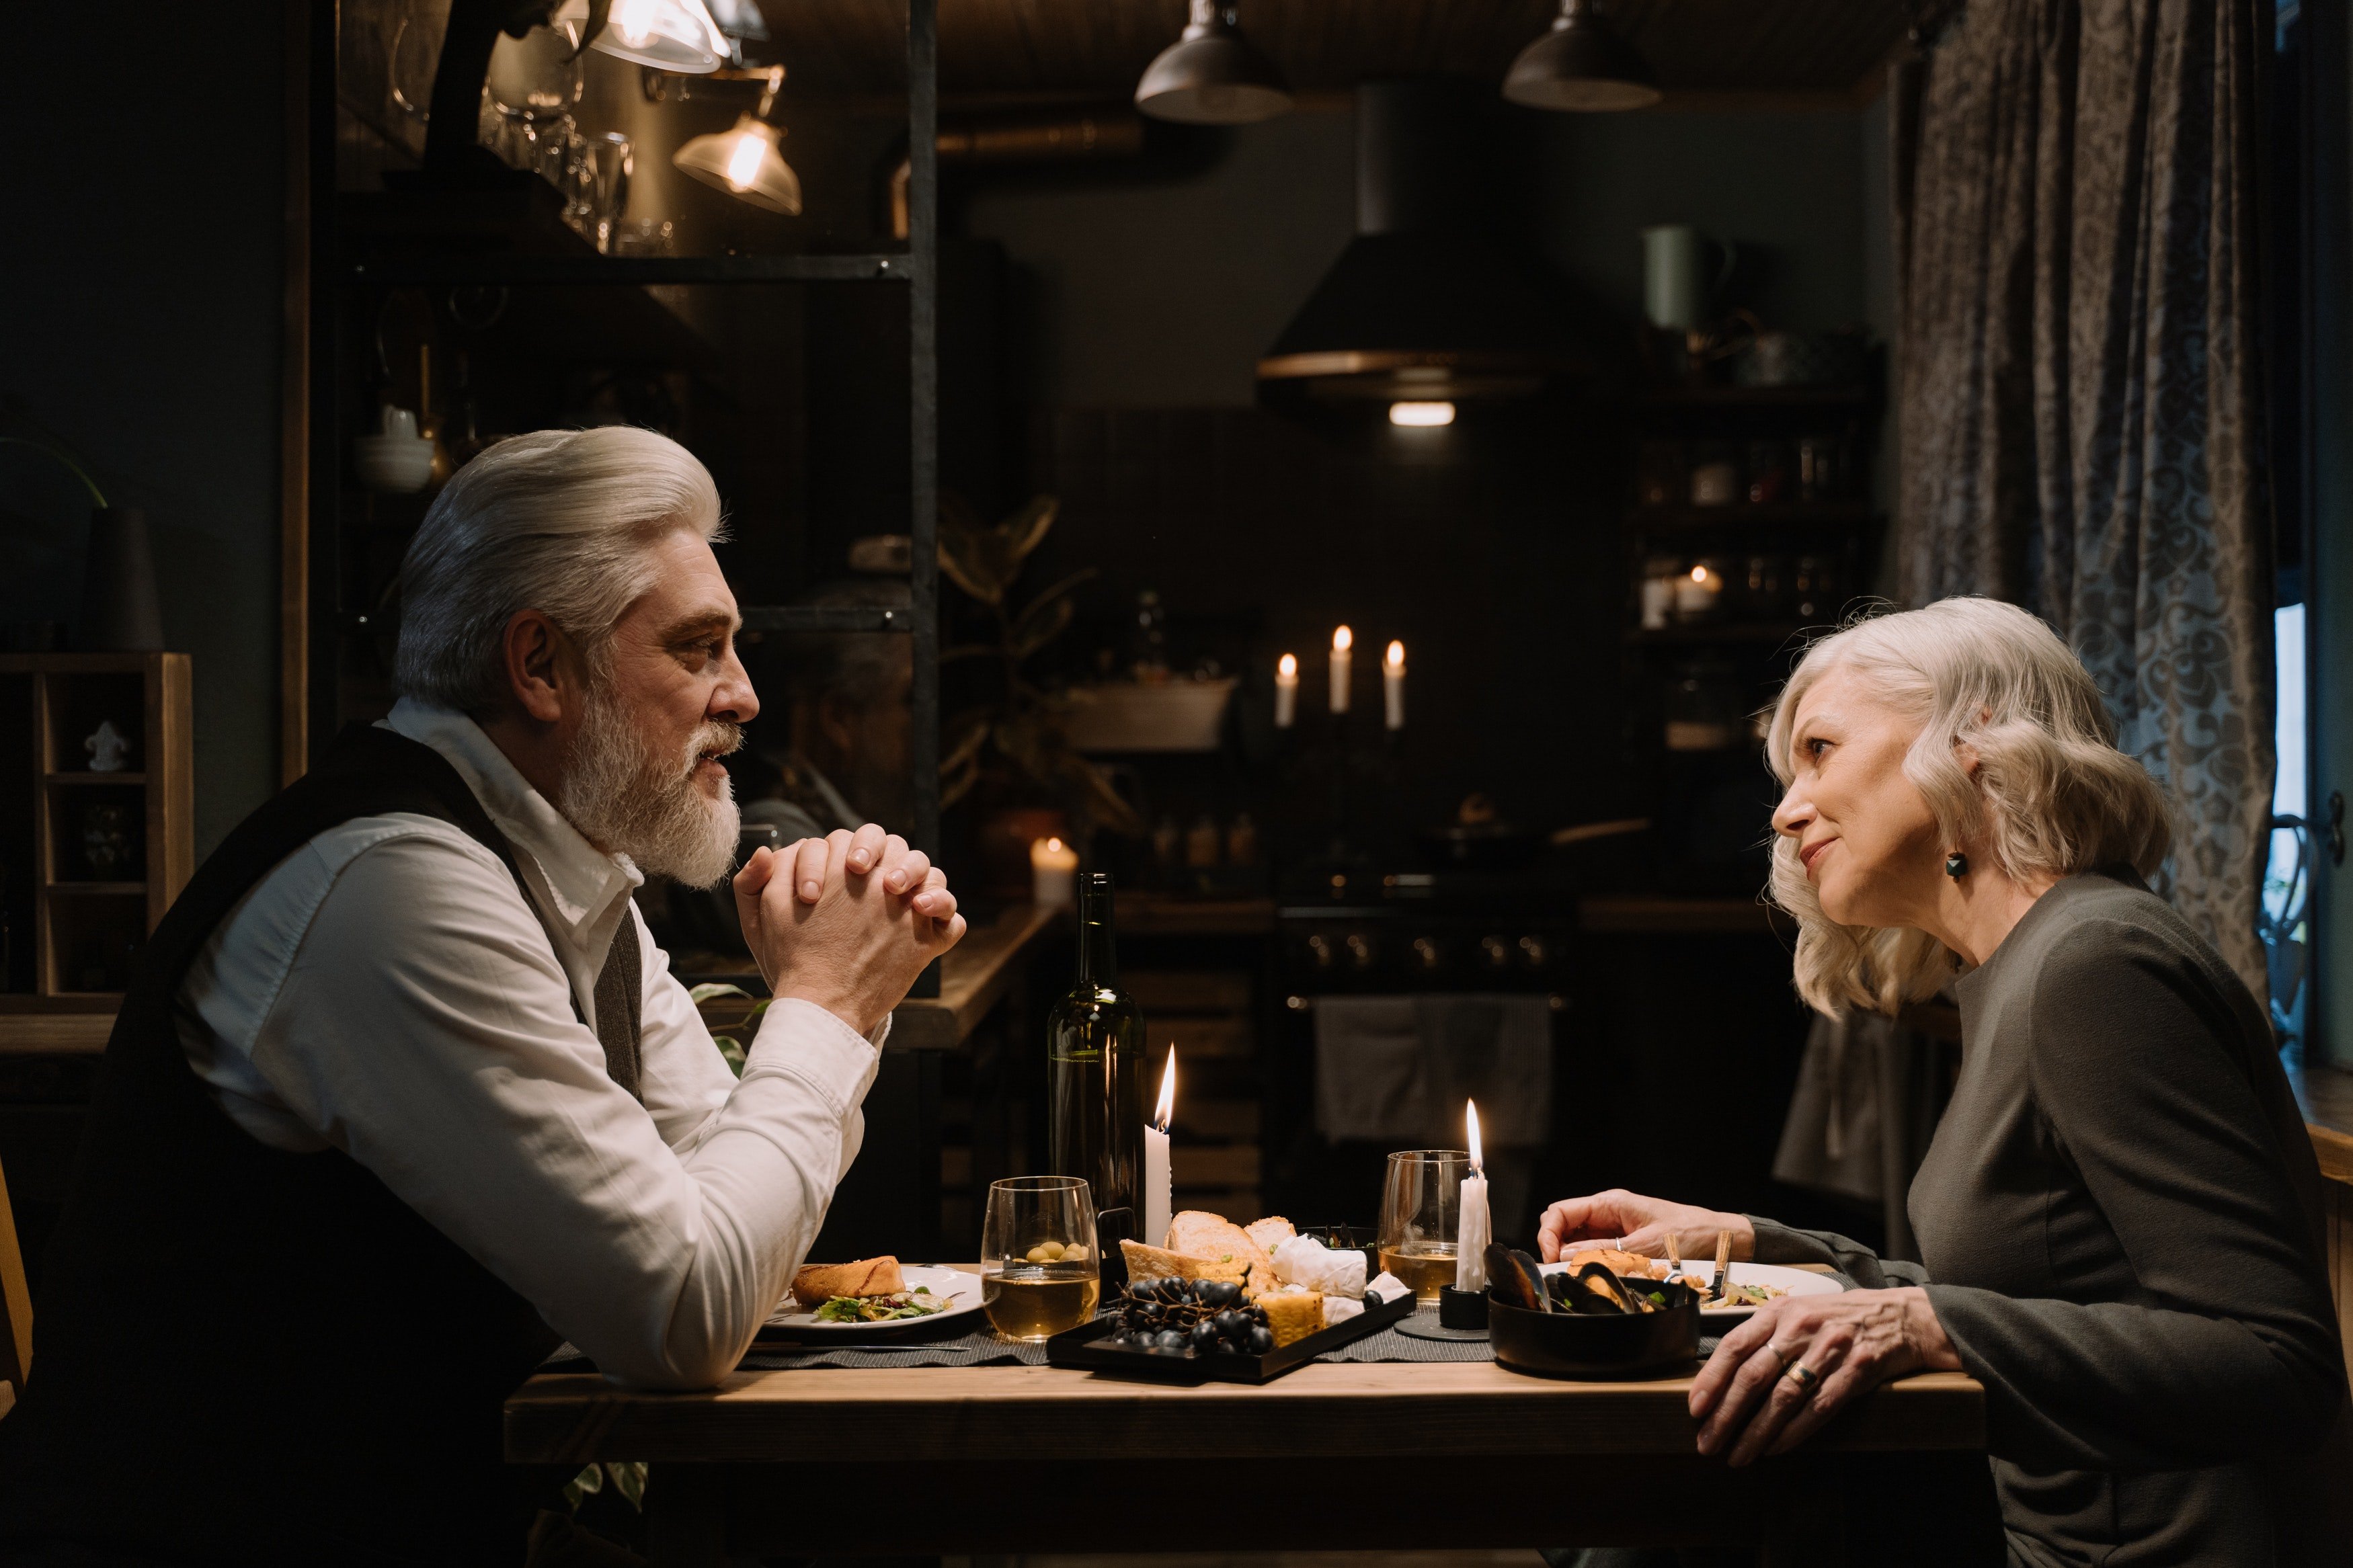 Howard and Debra had a wonderful dinner date | Photo: Pexels